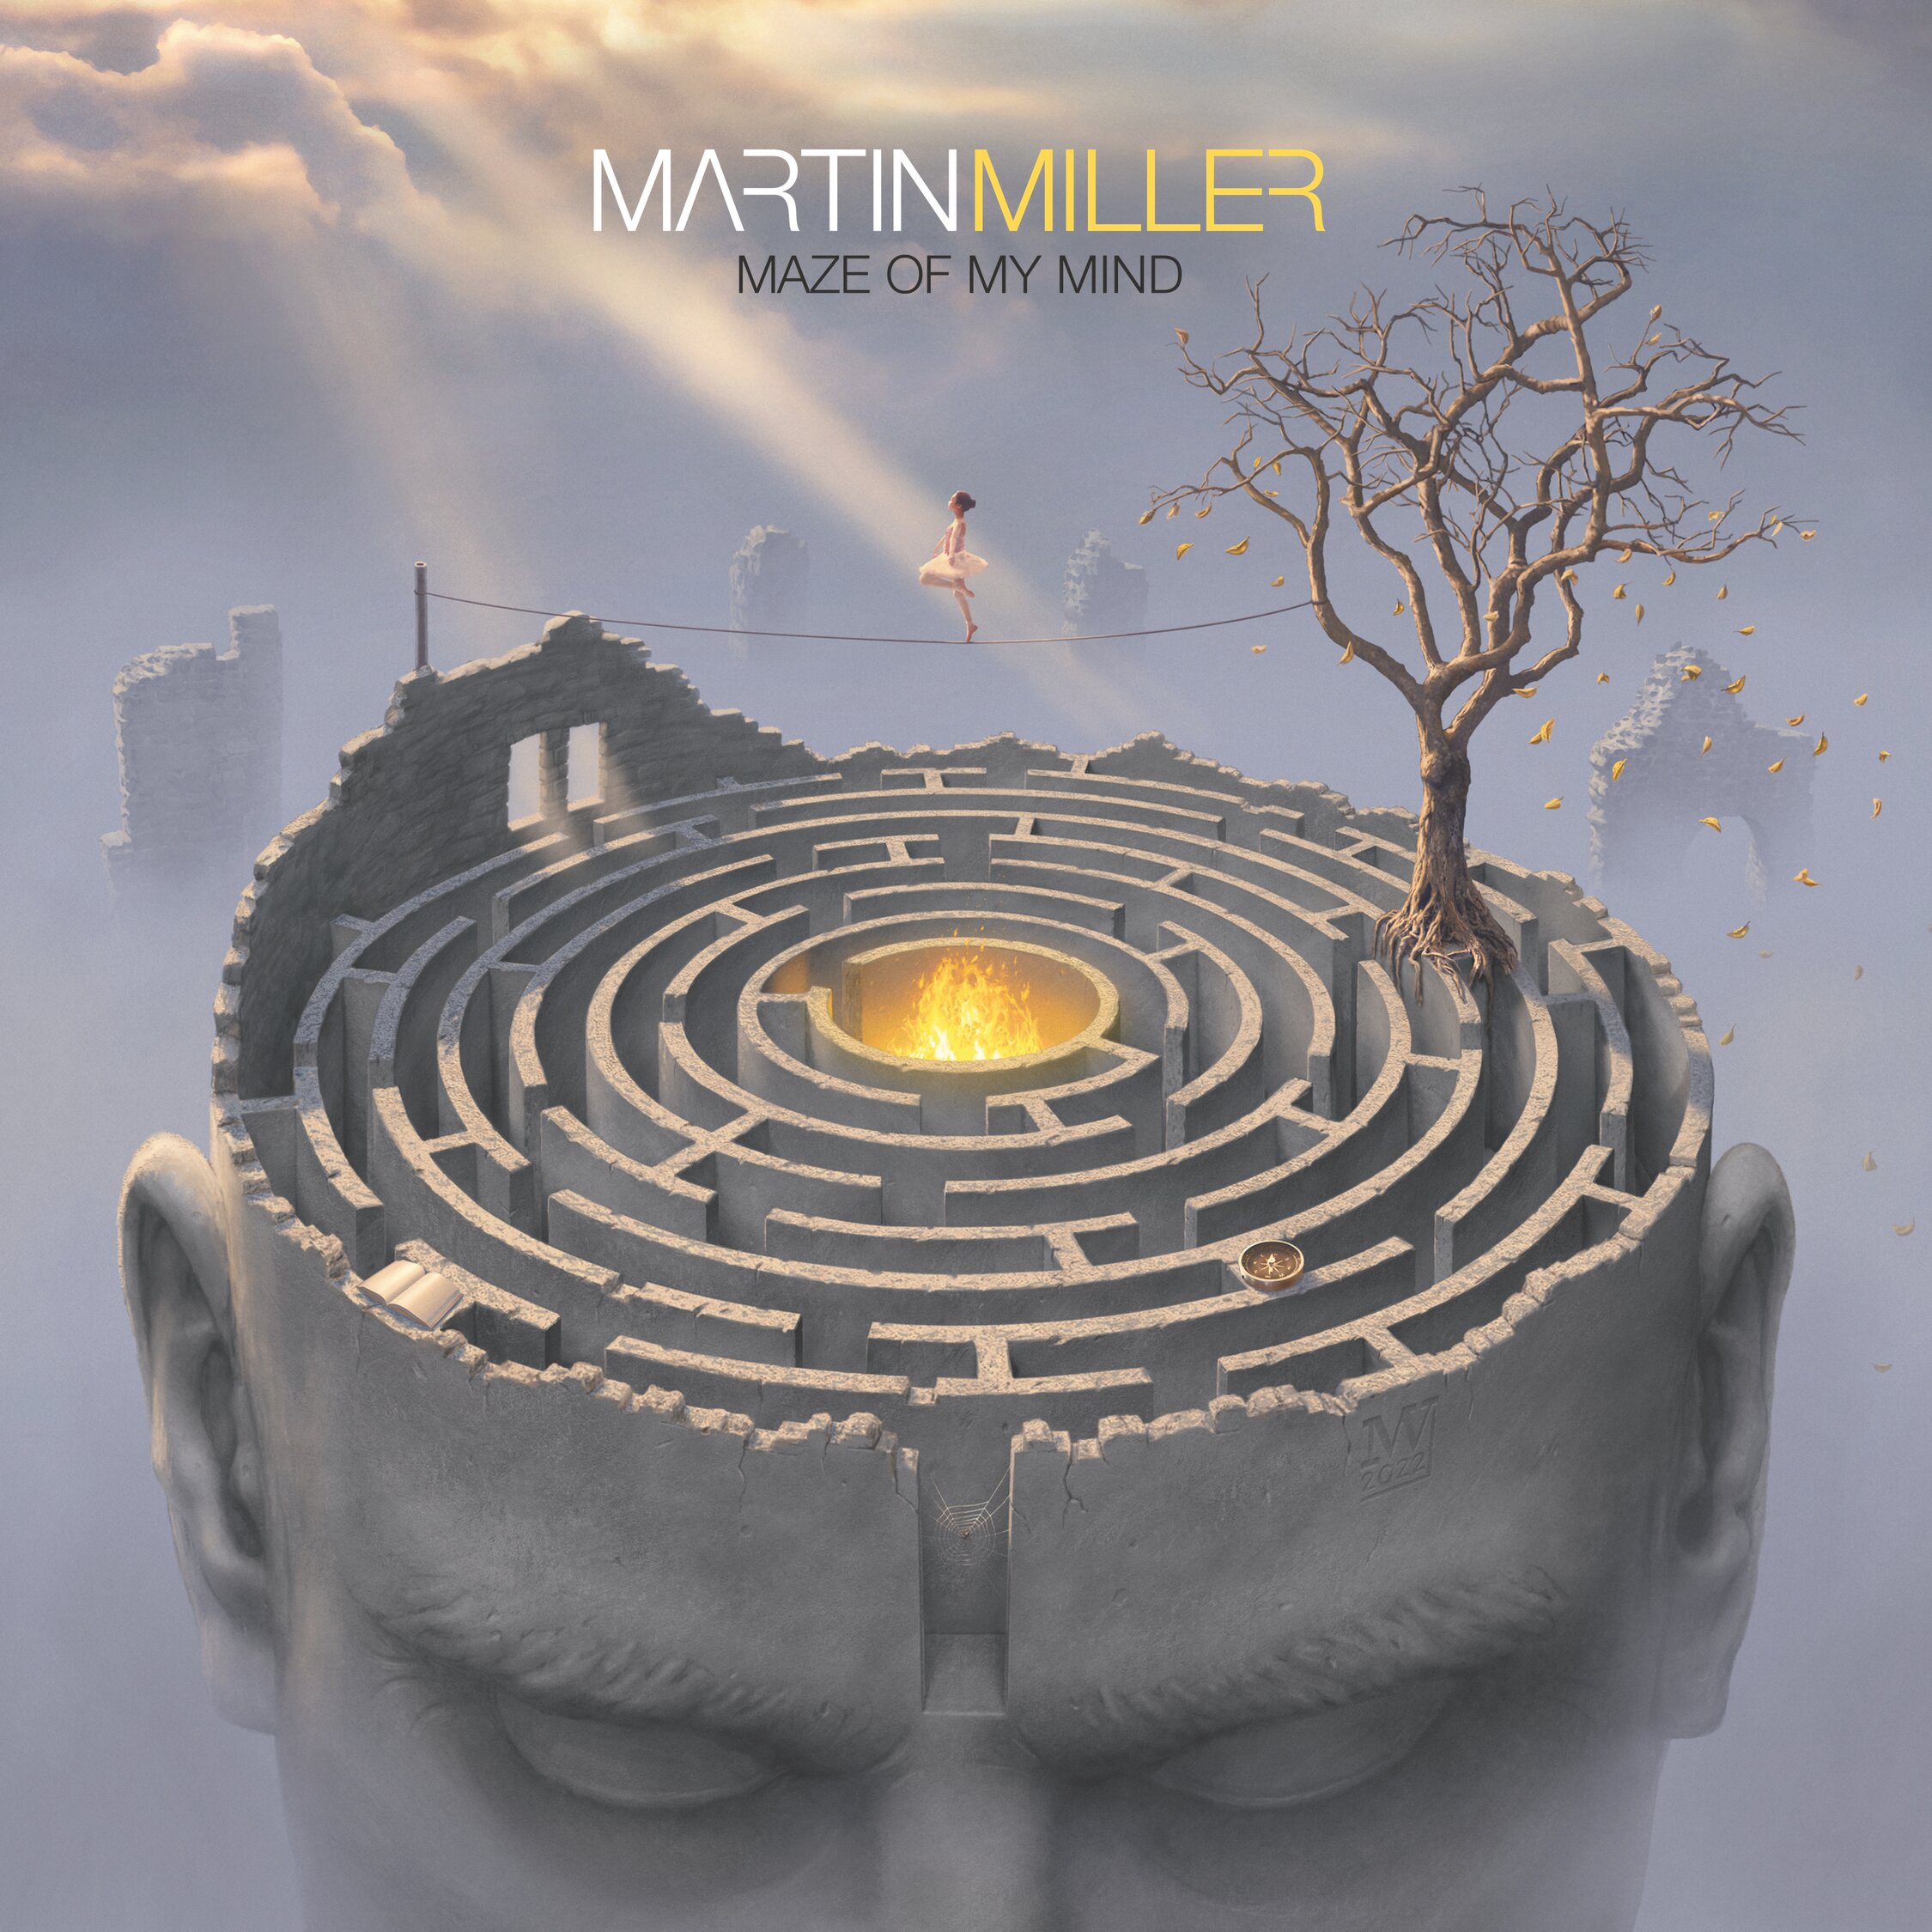 Martin_Miller_maze_of_my_mind_album_cover.jpg